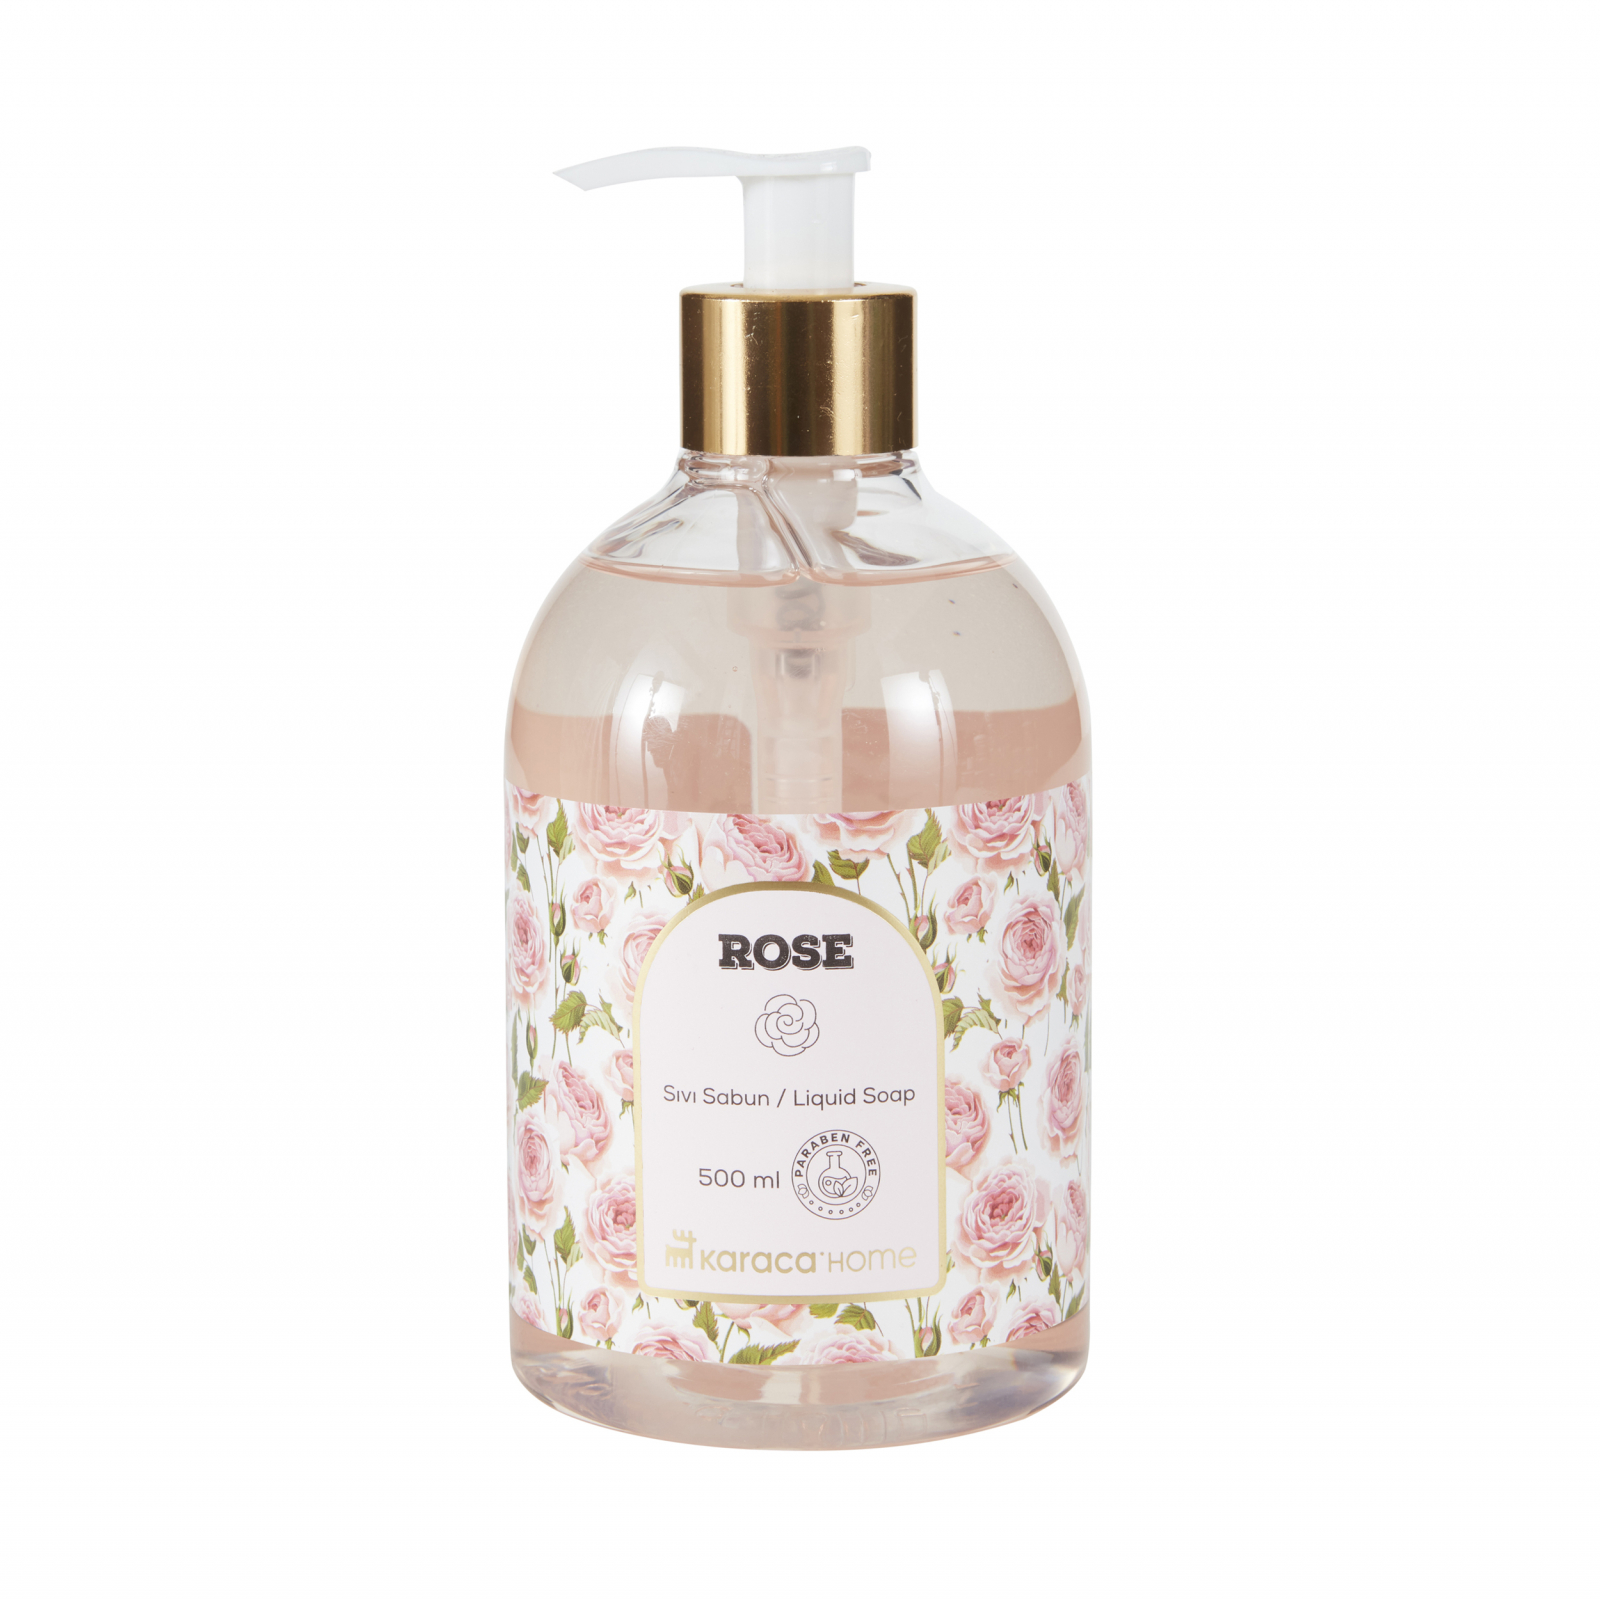 Karaca Home Çiçek Rose Sıvı Sabun 500 ml